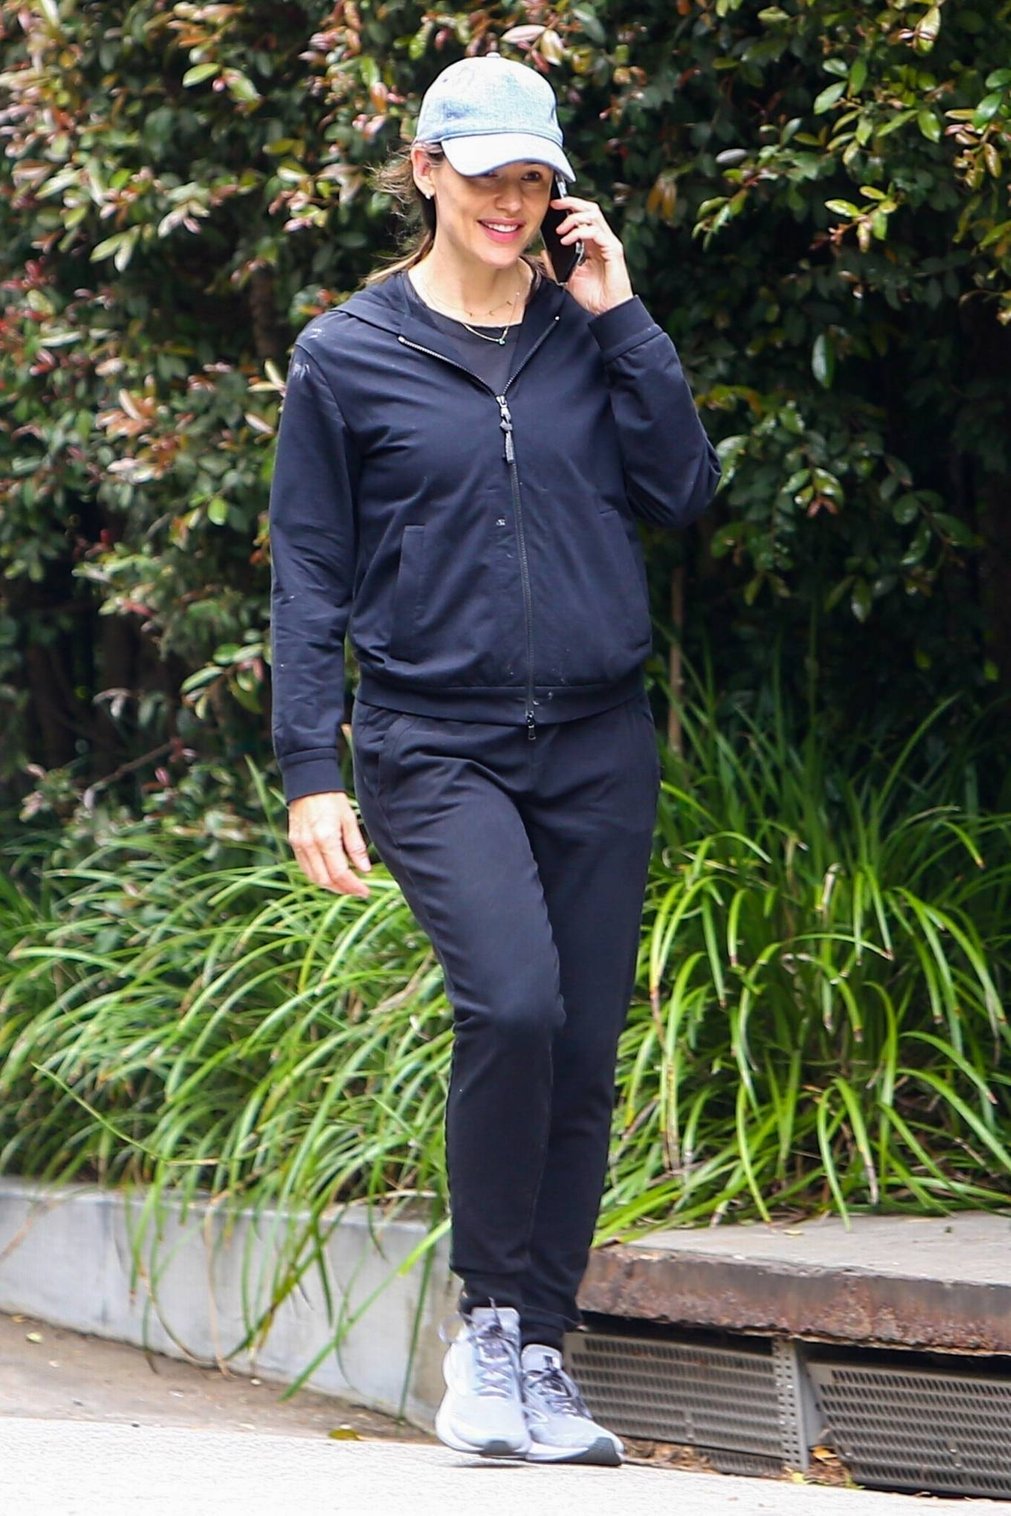 Jennifer Garner - morning walk through her Brentwood neighborhood